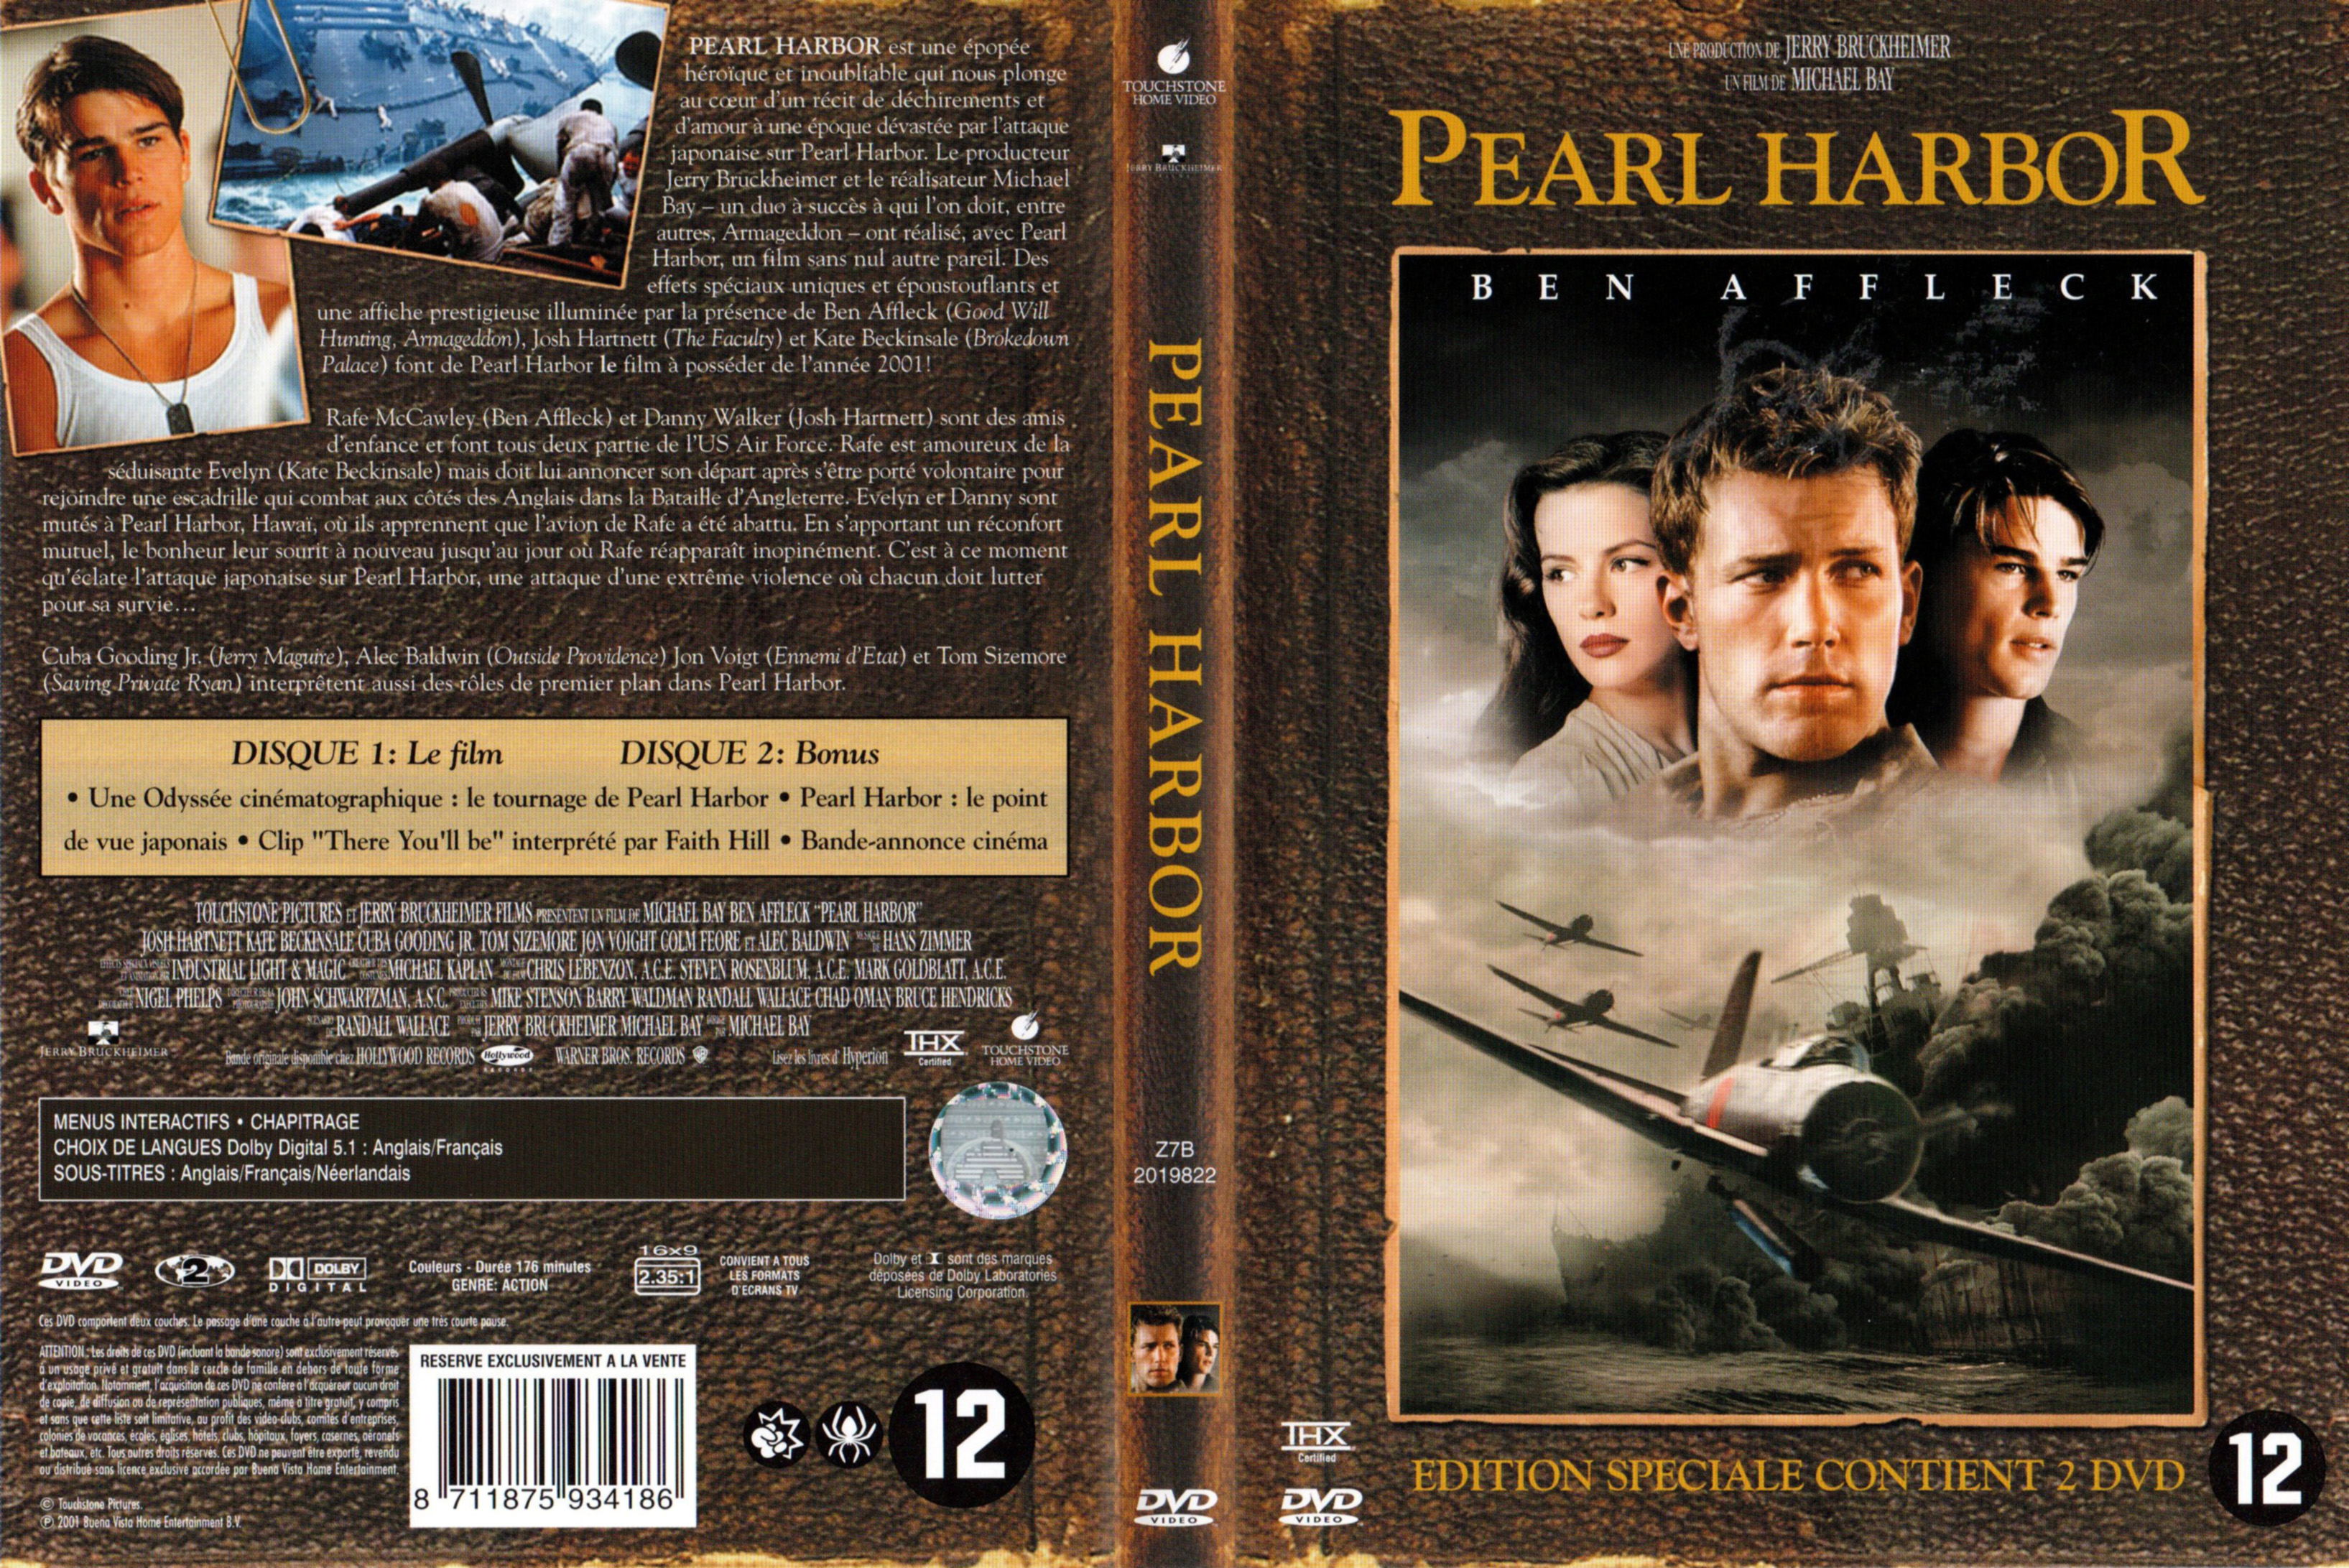 Jaquette DVD Pearl Harbor v4